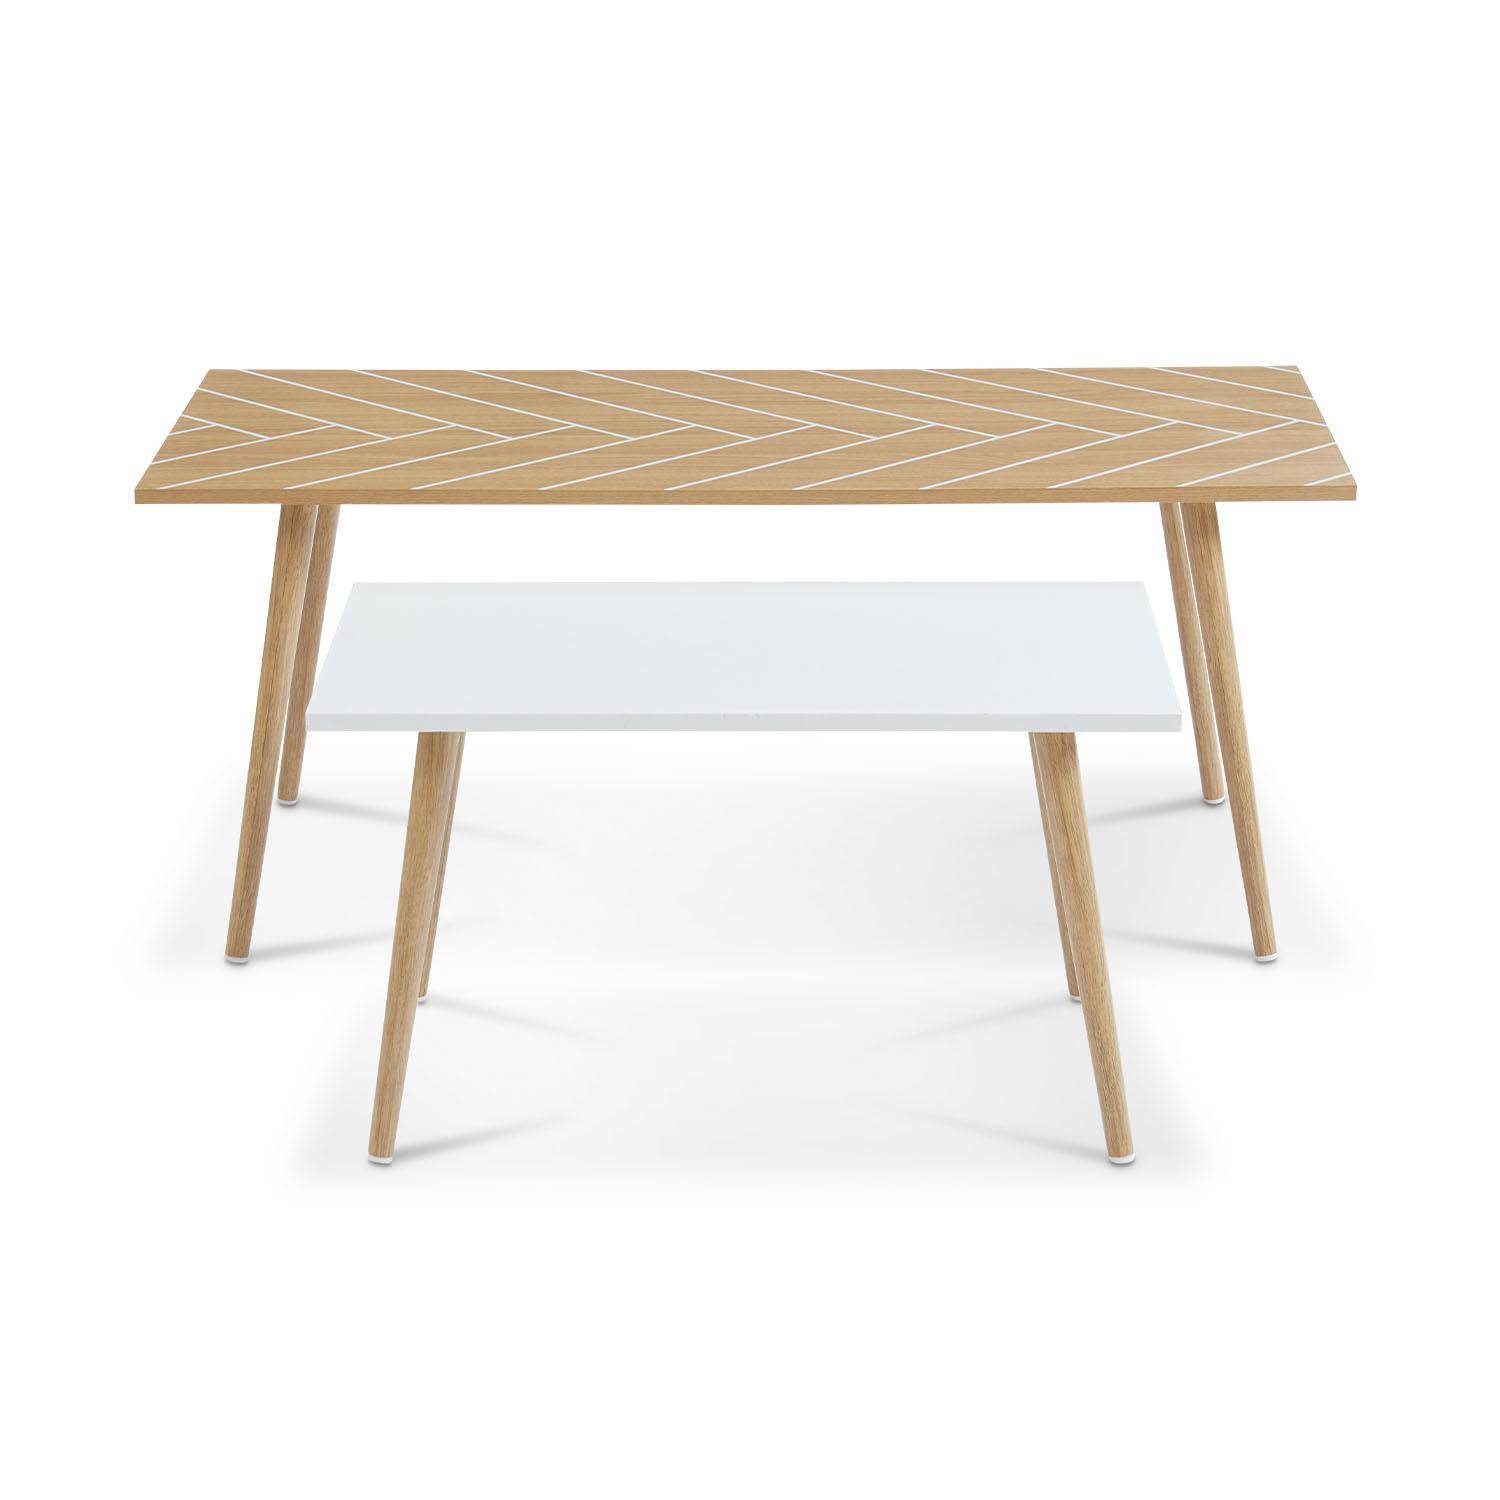 Conjunto de 2 mesas de centro natural y blanco - 110x50x45,5cm y 70x40x39cm - Etnik - base de madera maciza de eucalipto, diseño escandinavo Photo2